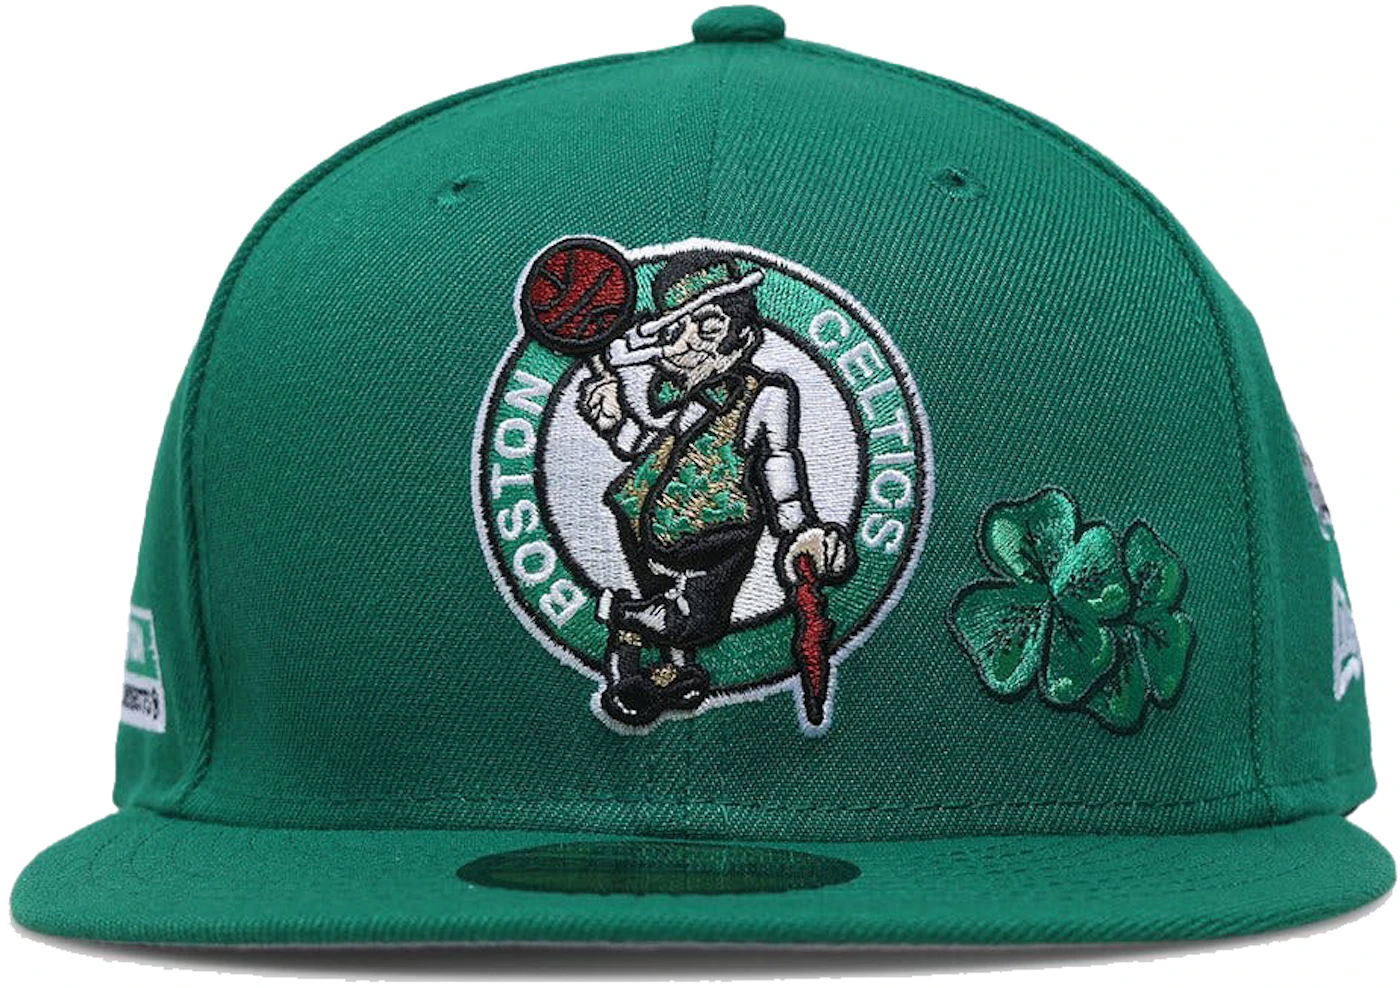 New Era Boston Celtics Upside Down 59Fifty Fitted Hat Green Men's - FW21 -  US